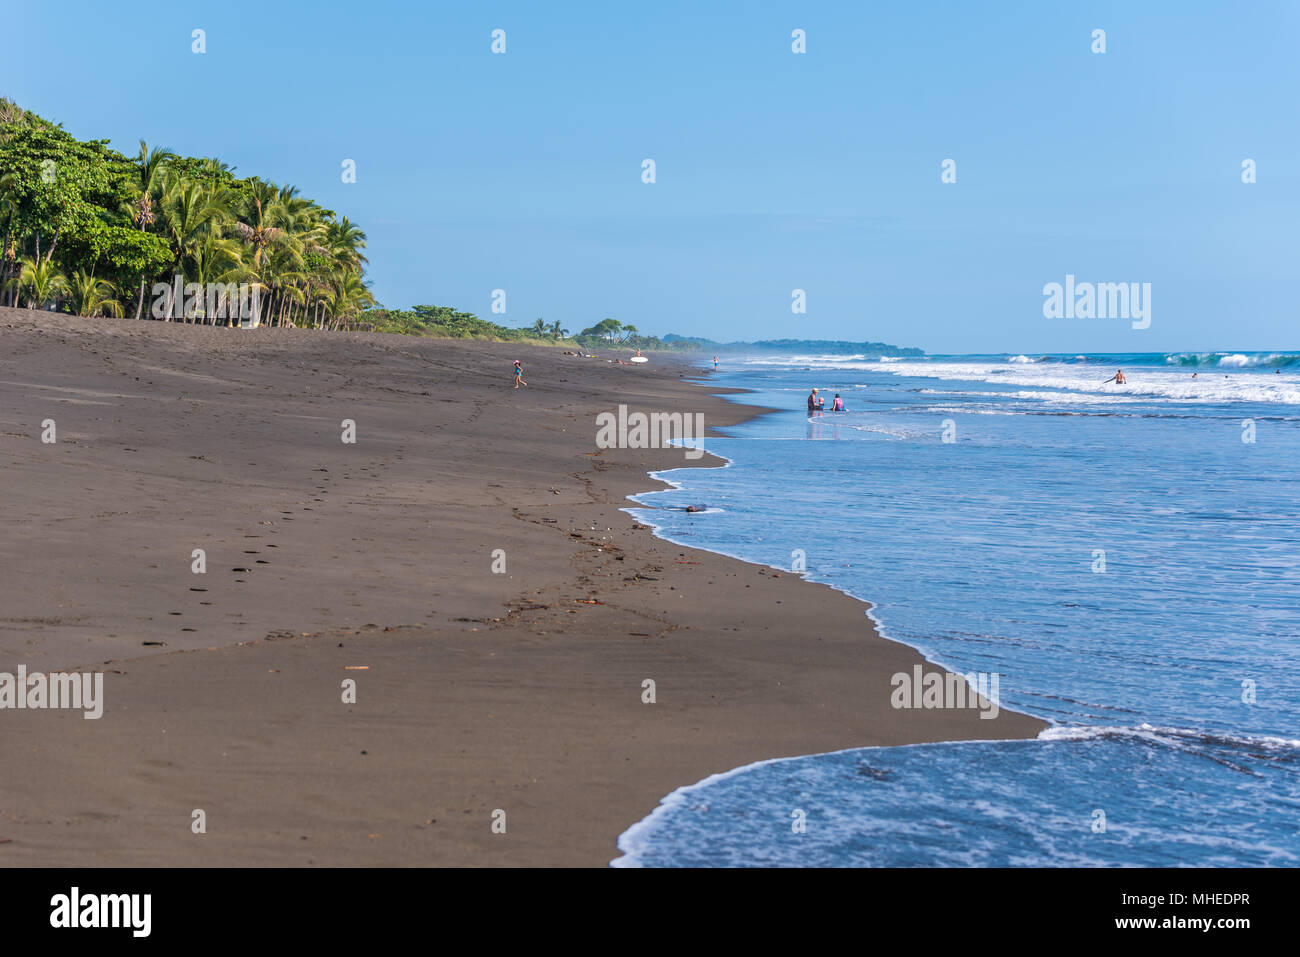 Playa hermosa en Costa Rica - pacific coast Stock Photo